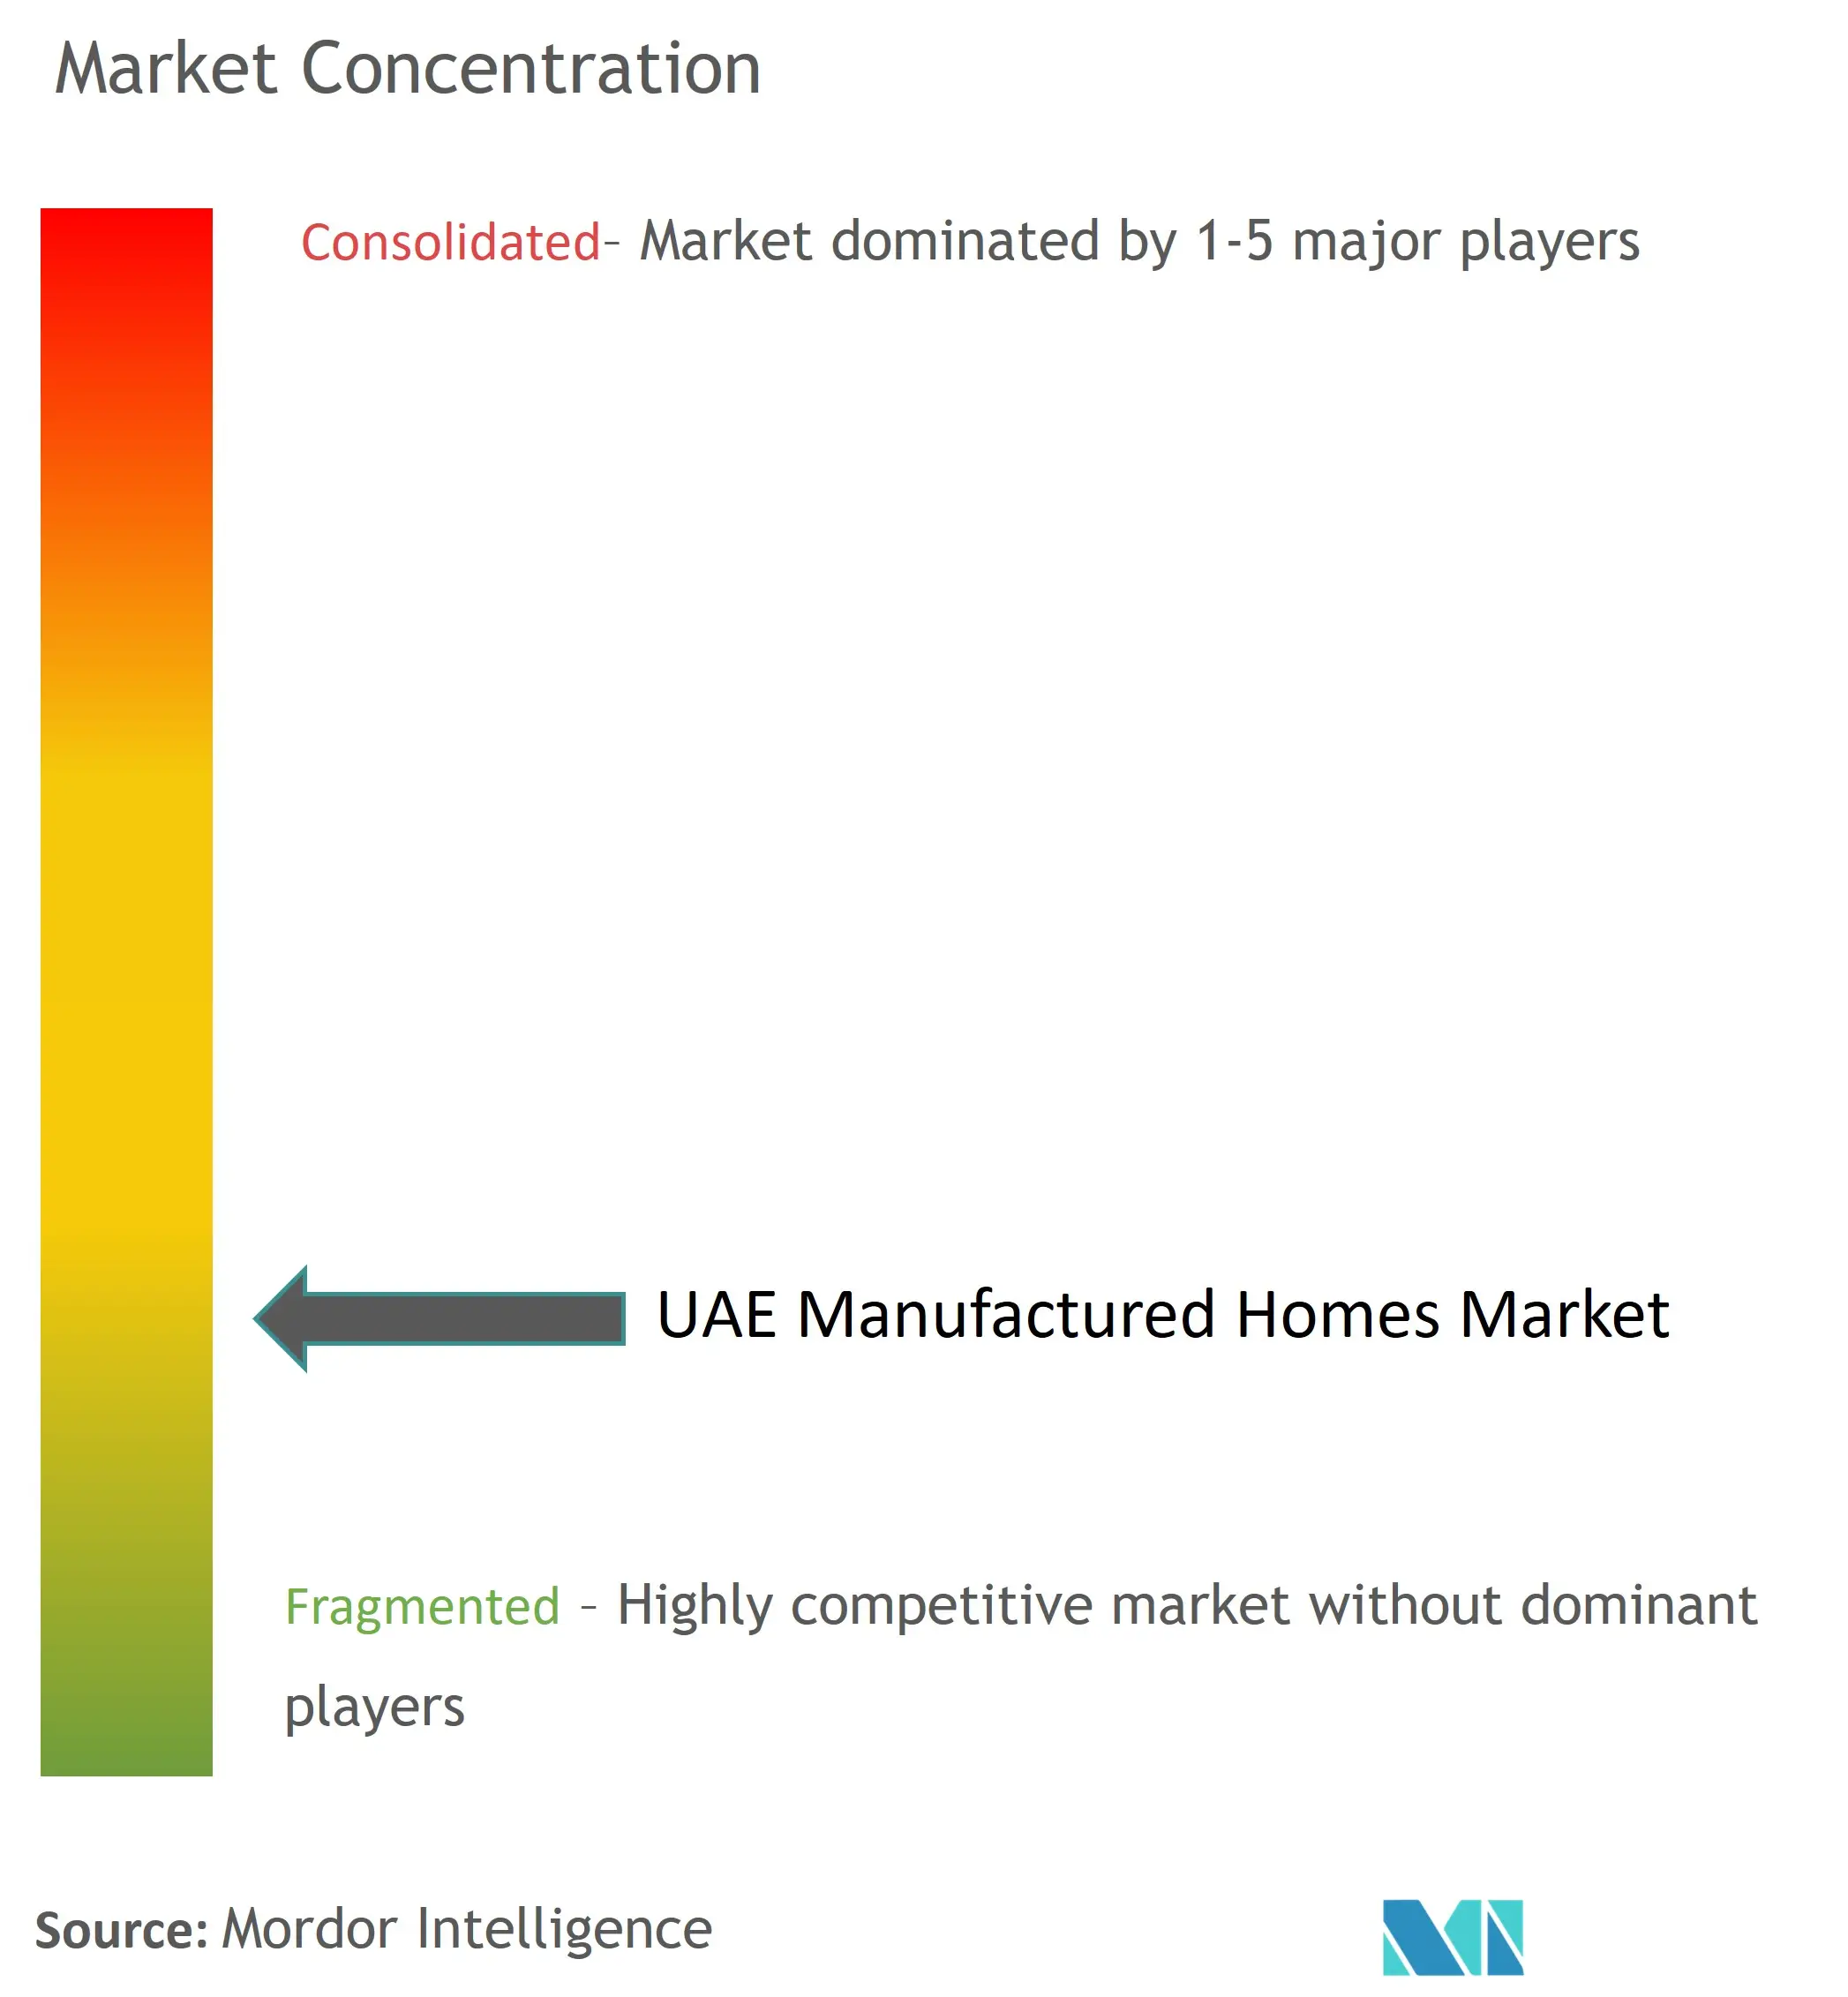 UAE Manufactured Homes Market Concentration